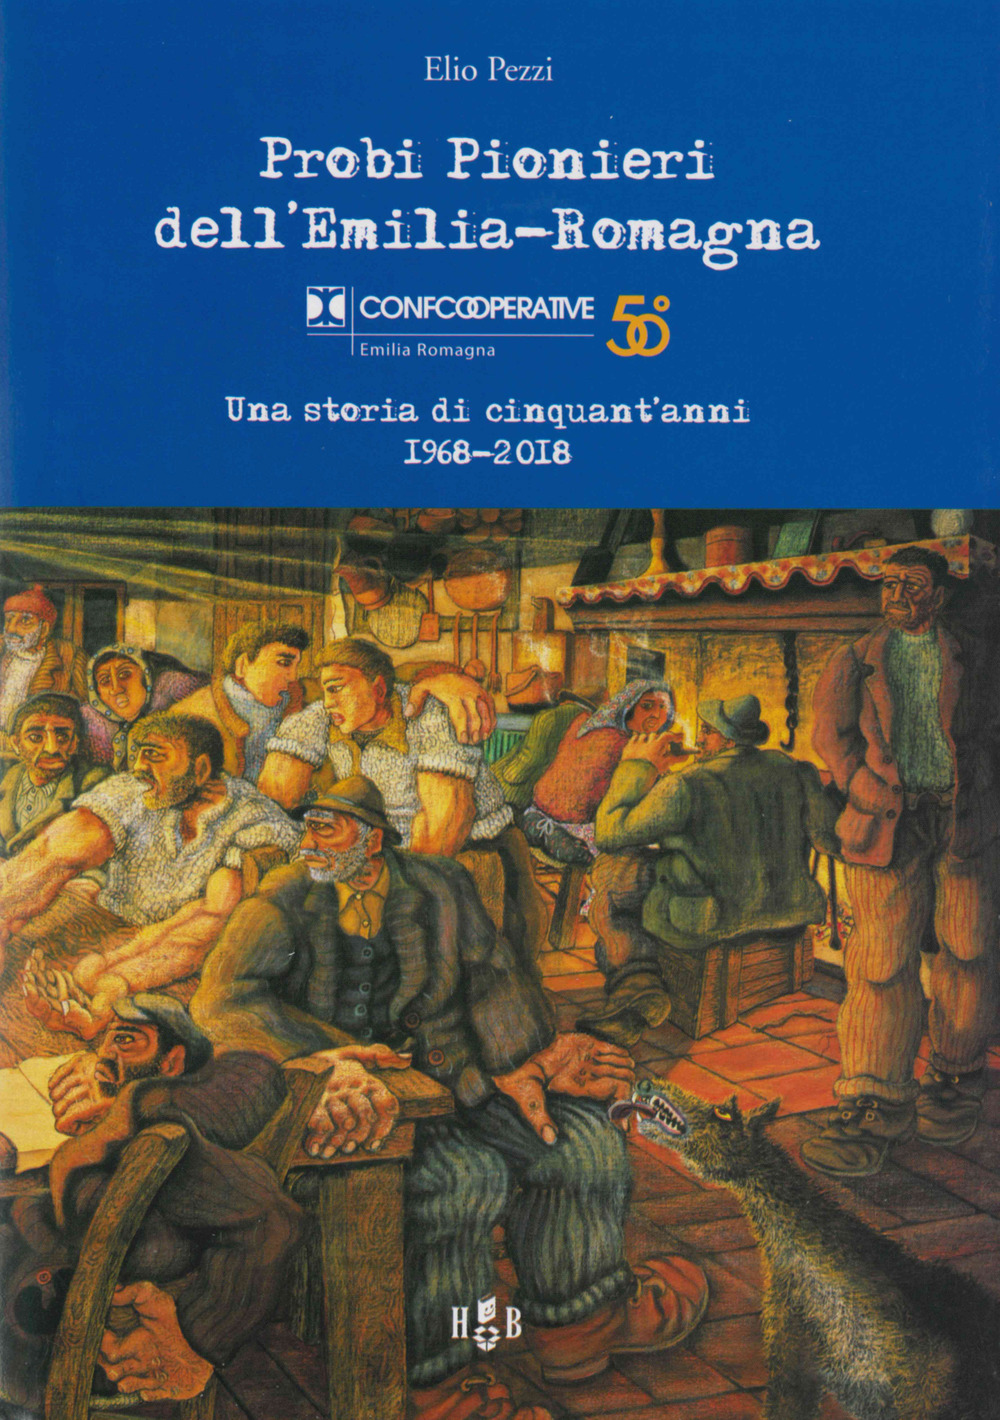 Probi pionieri dell'Emilia-Romagna. Confcooperative. Una storia di cinquant'anni 1968-2018